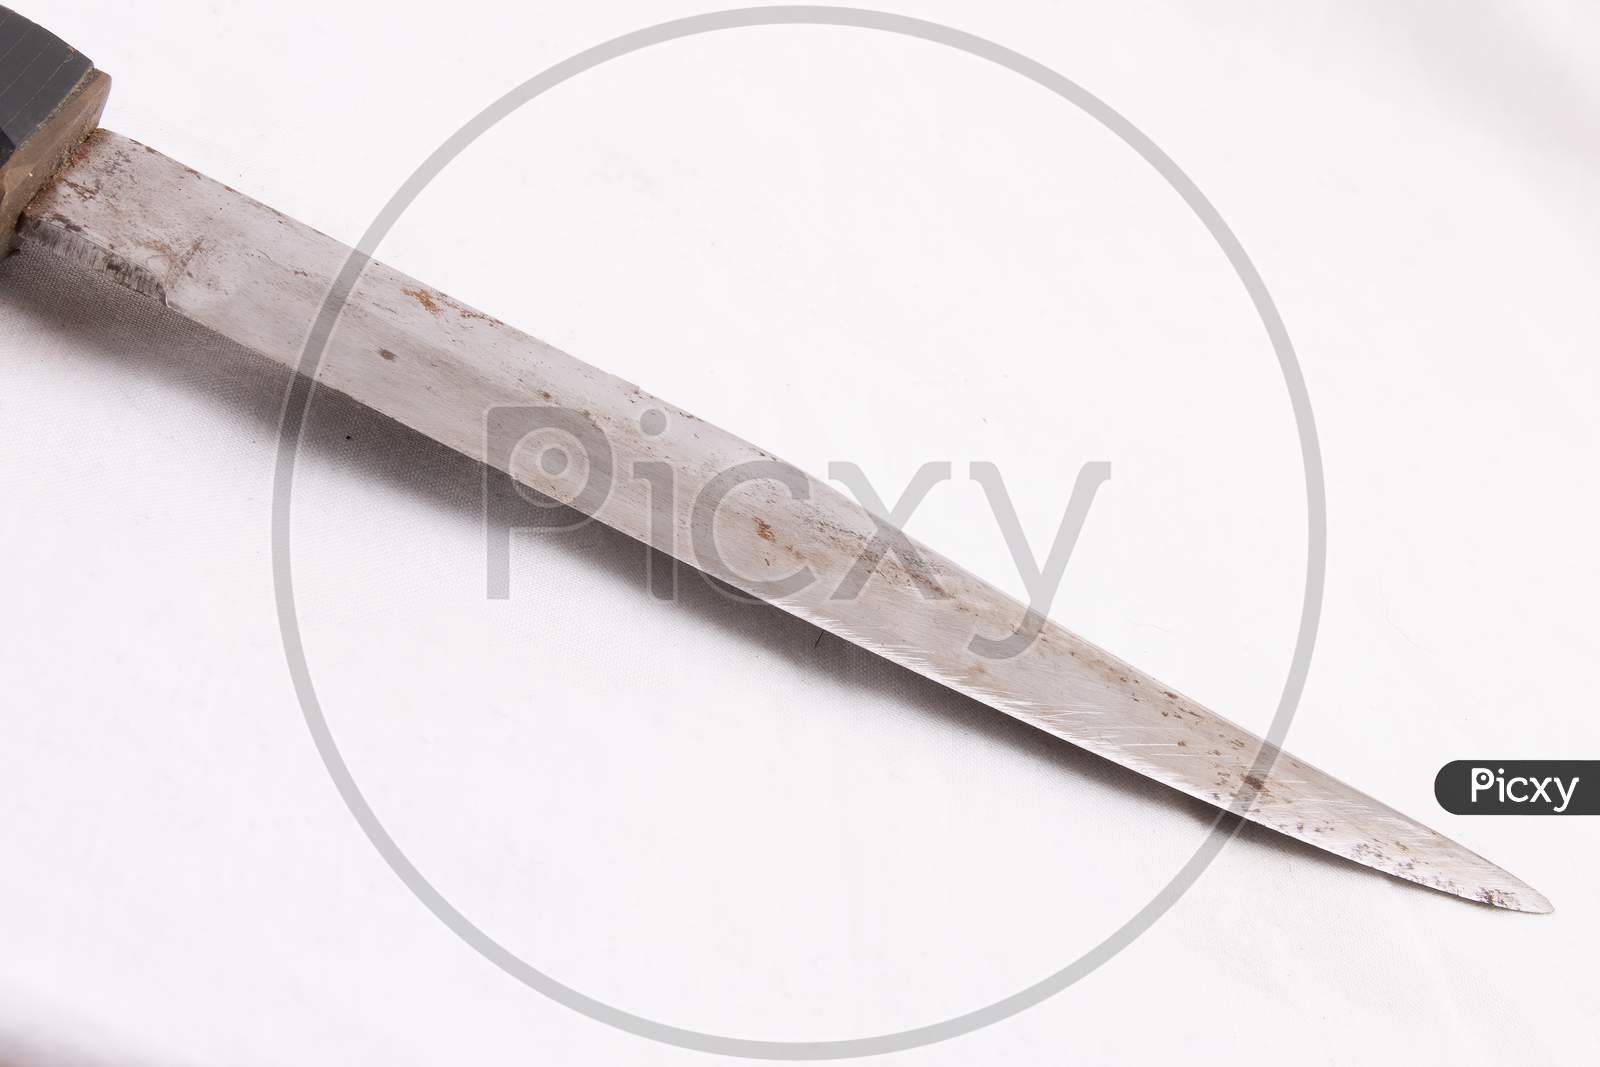 Vintage Dagger Knife Blade Isolated On White